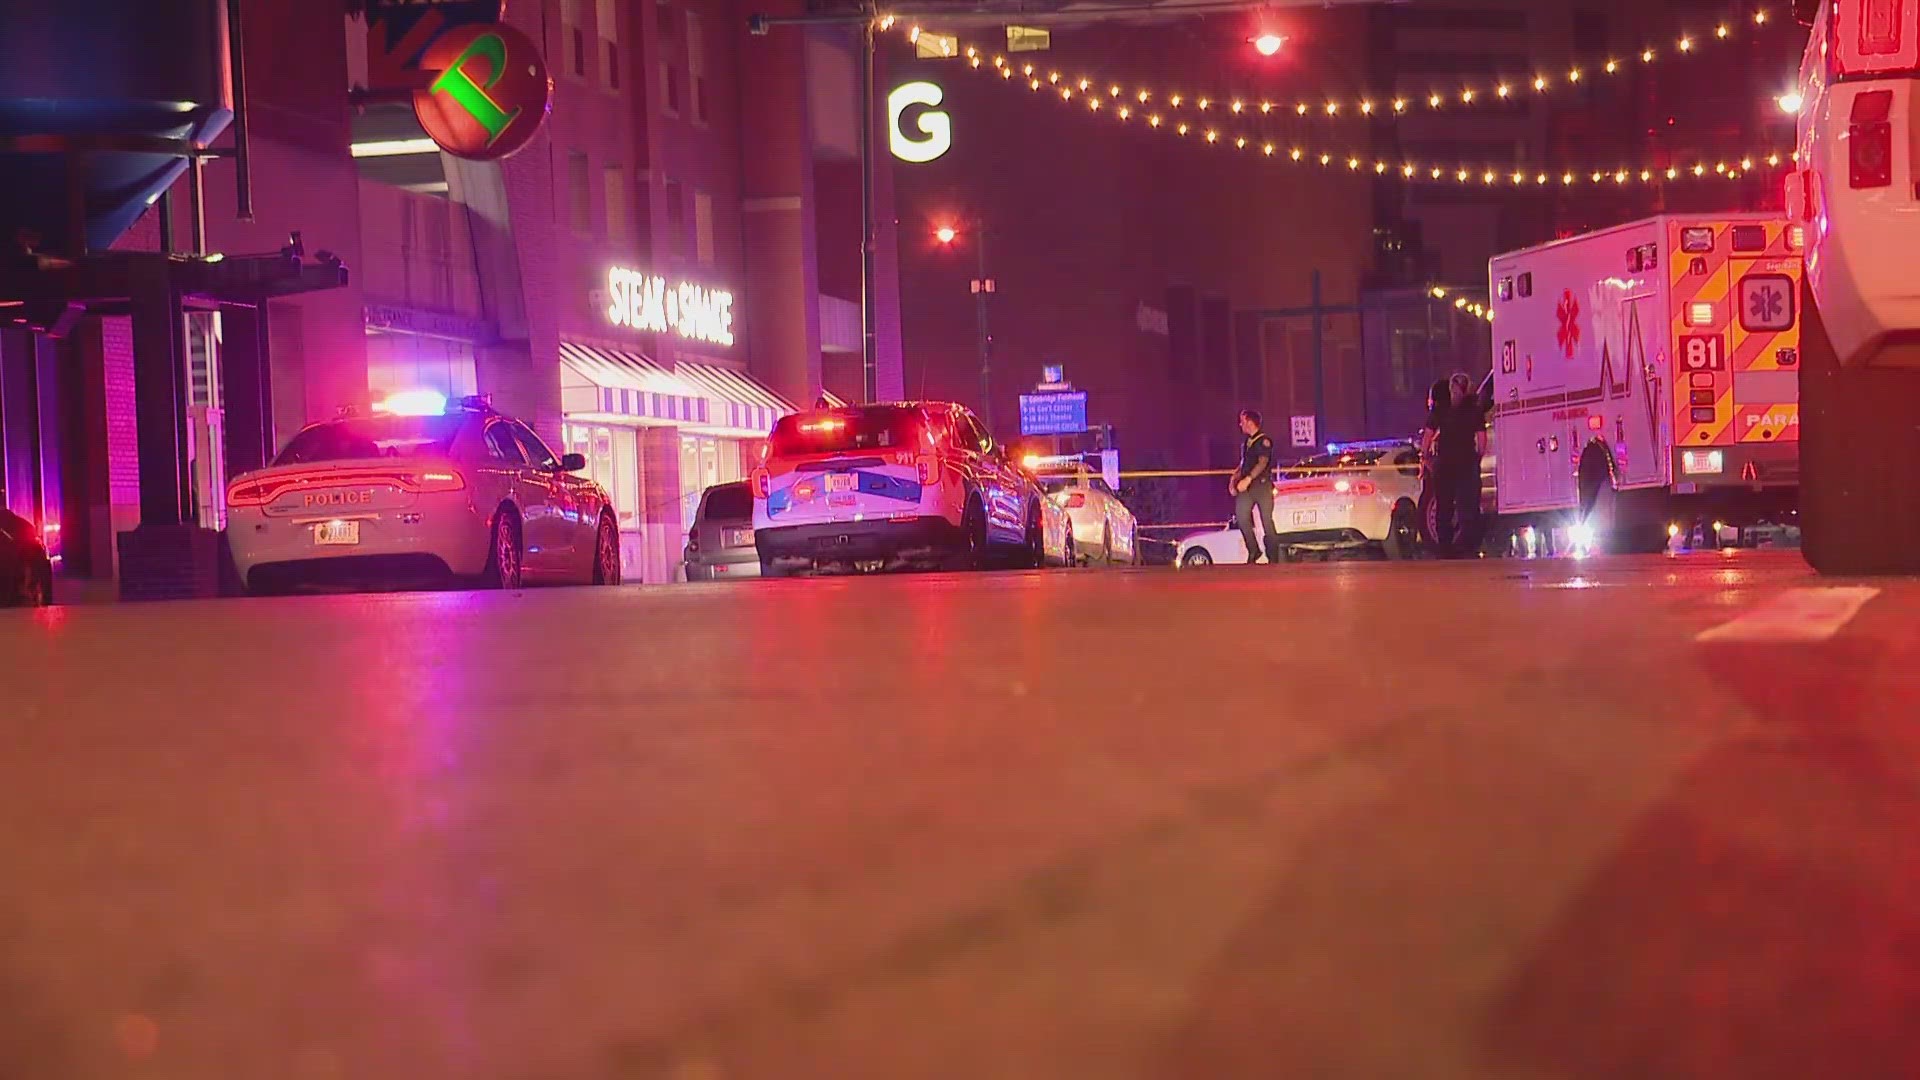 13News reporter Logan Gay breaks down Saturday night's mass shooting that injured 7 juveniles.